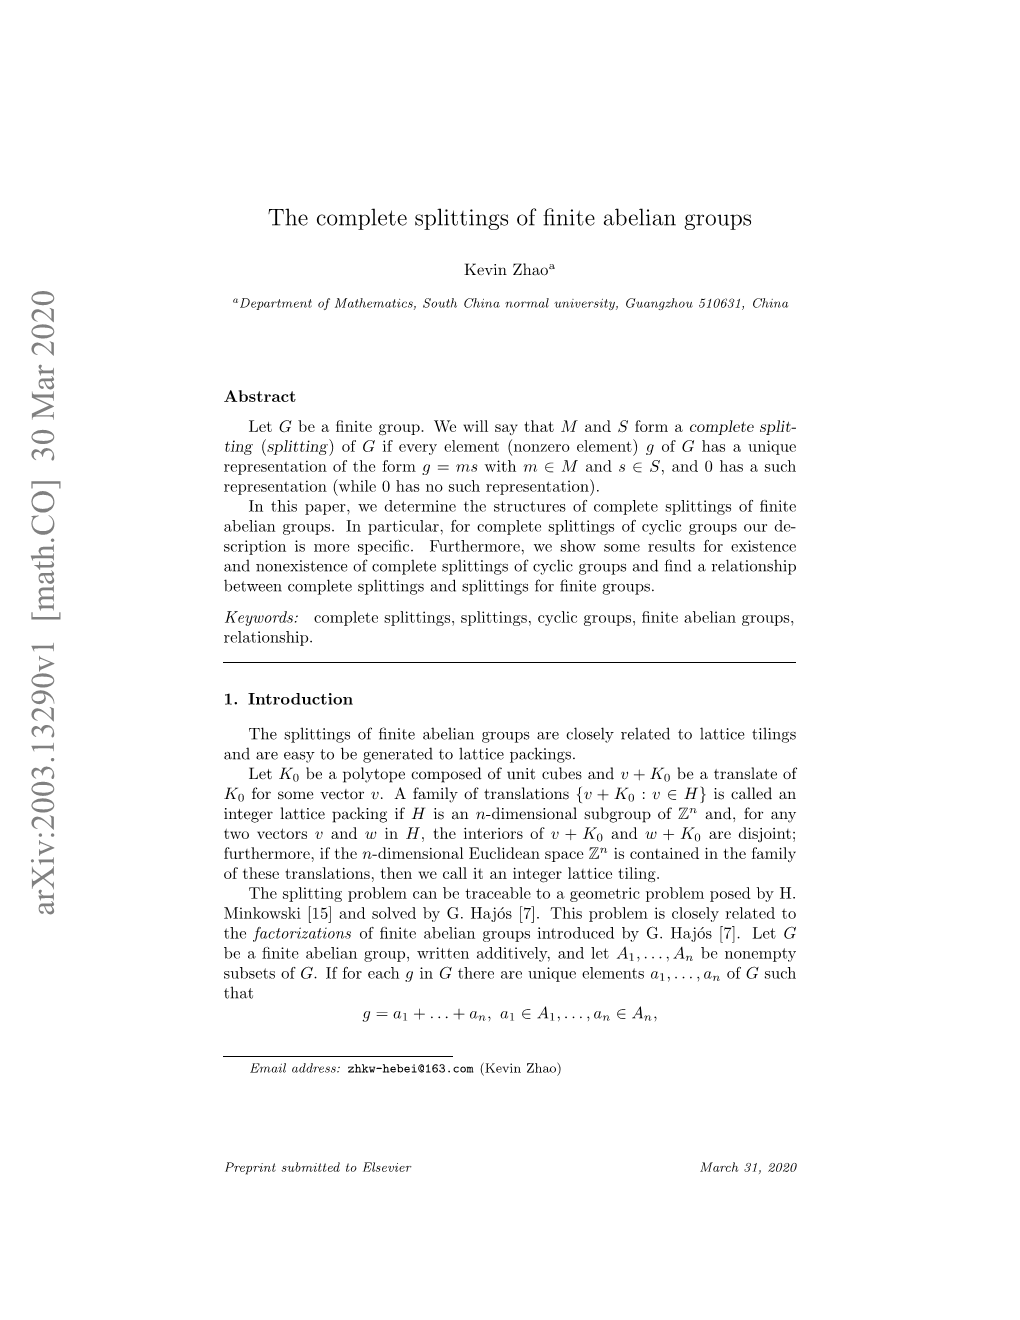 The Complete Splittings of Finite Abelian Groups